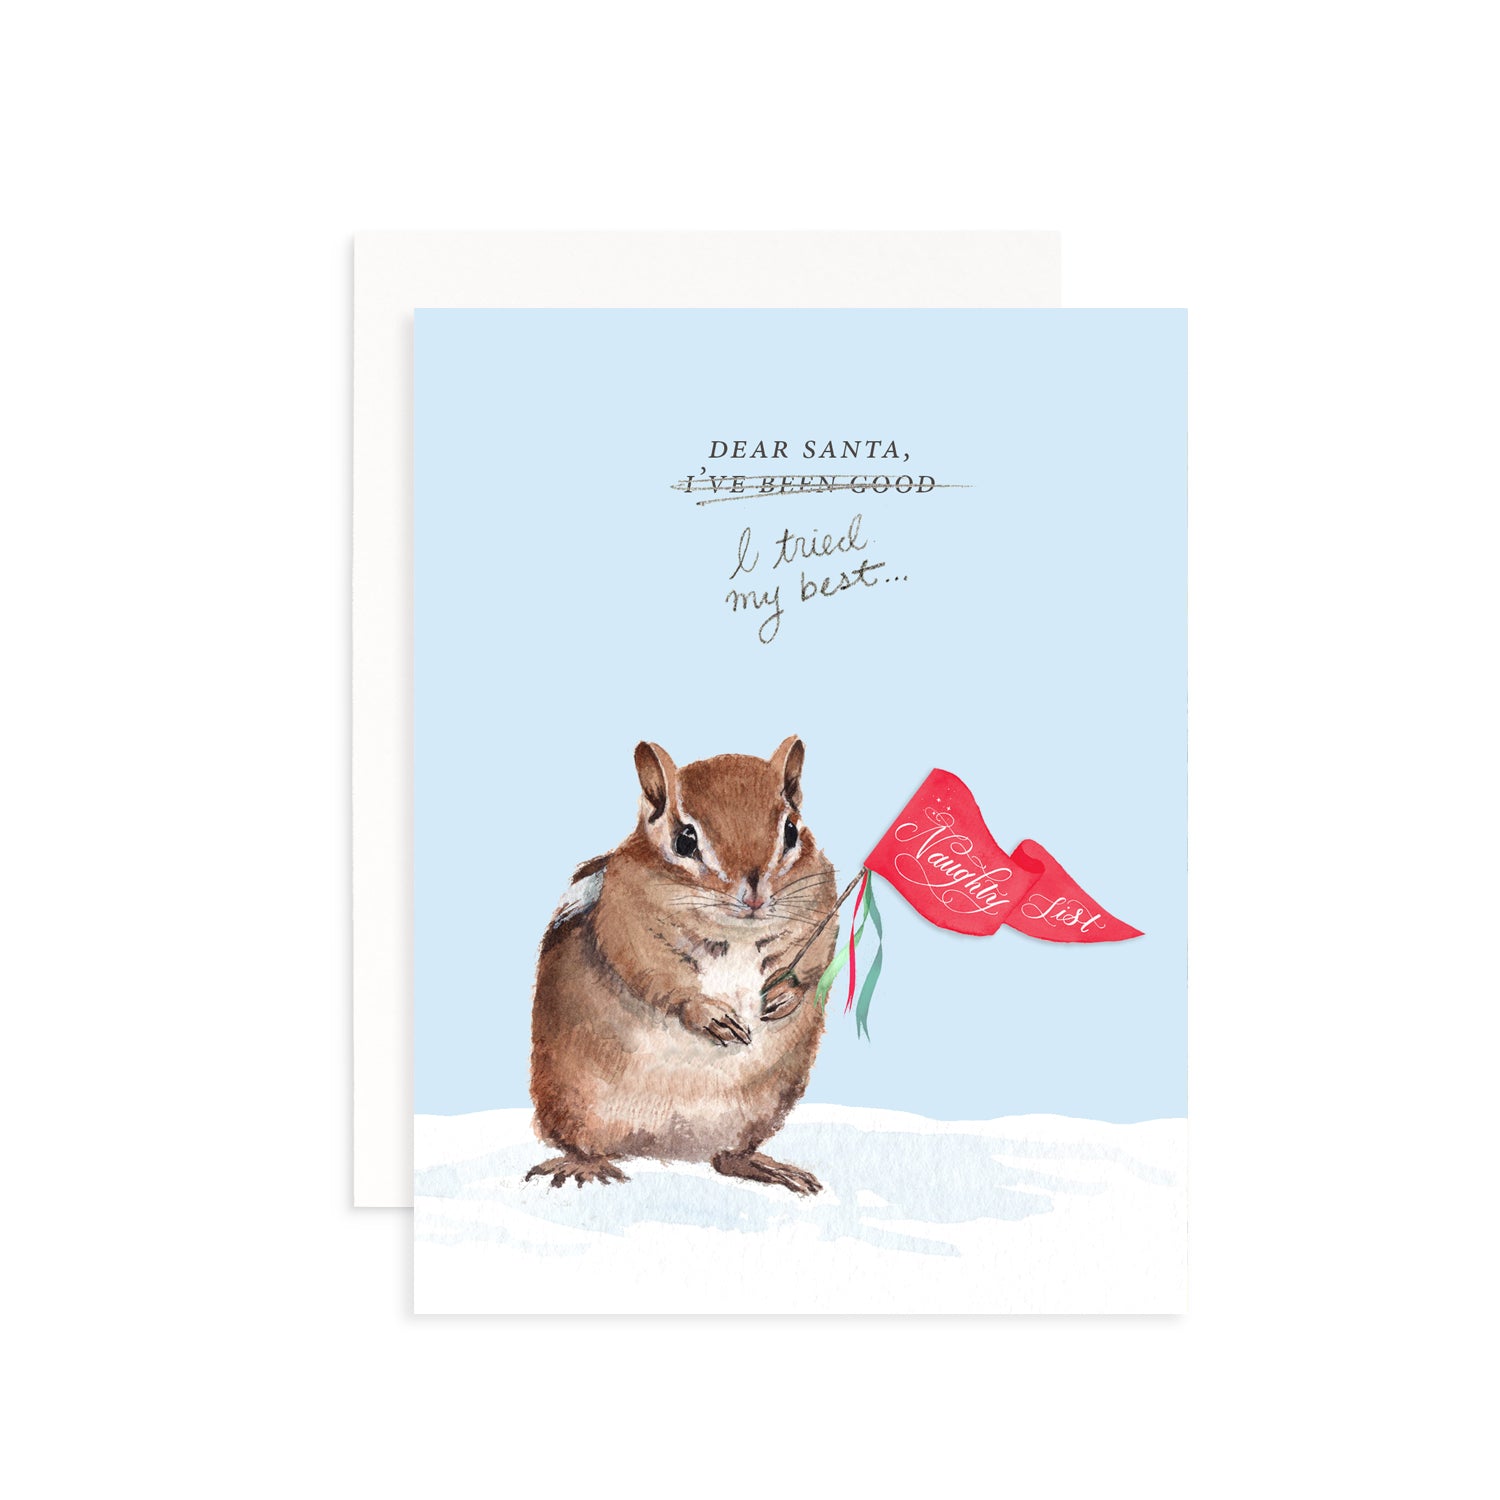 Dear Santa, I Tried! Christmas Greeting Card